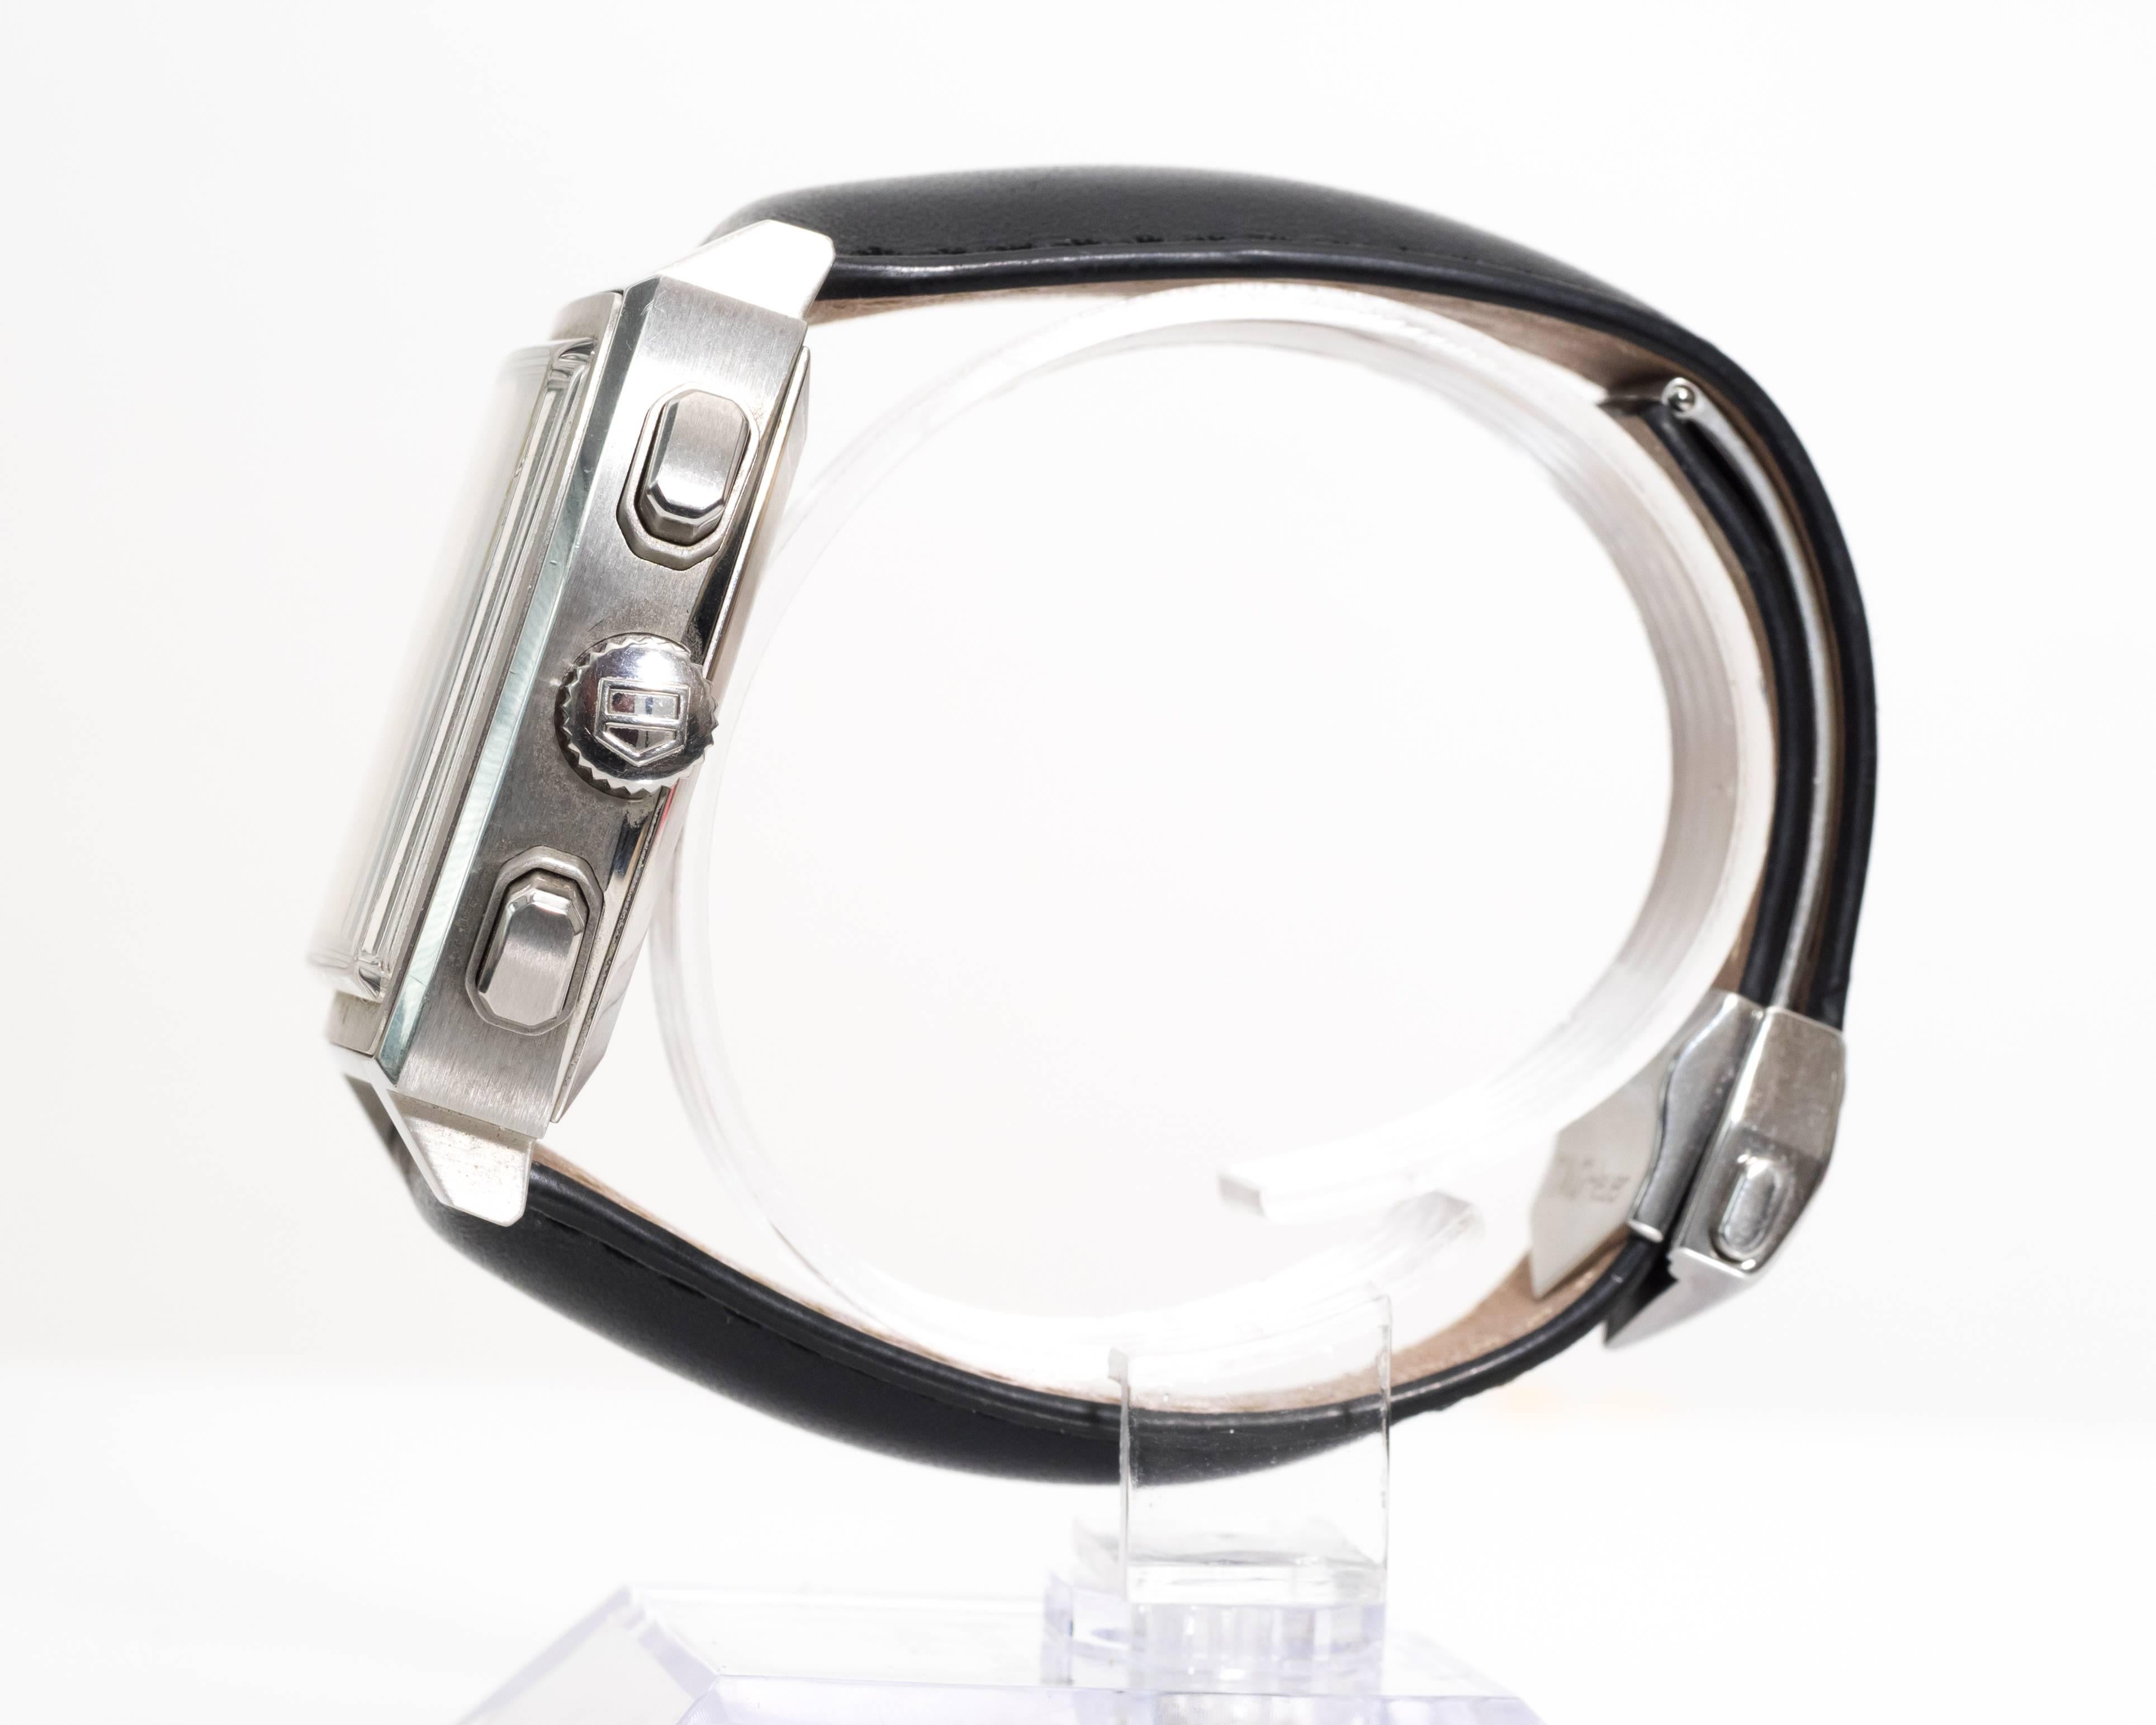  Tag Heuer Monaco Stainless Steel Wristwatch 1